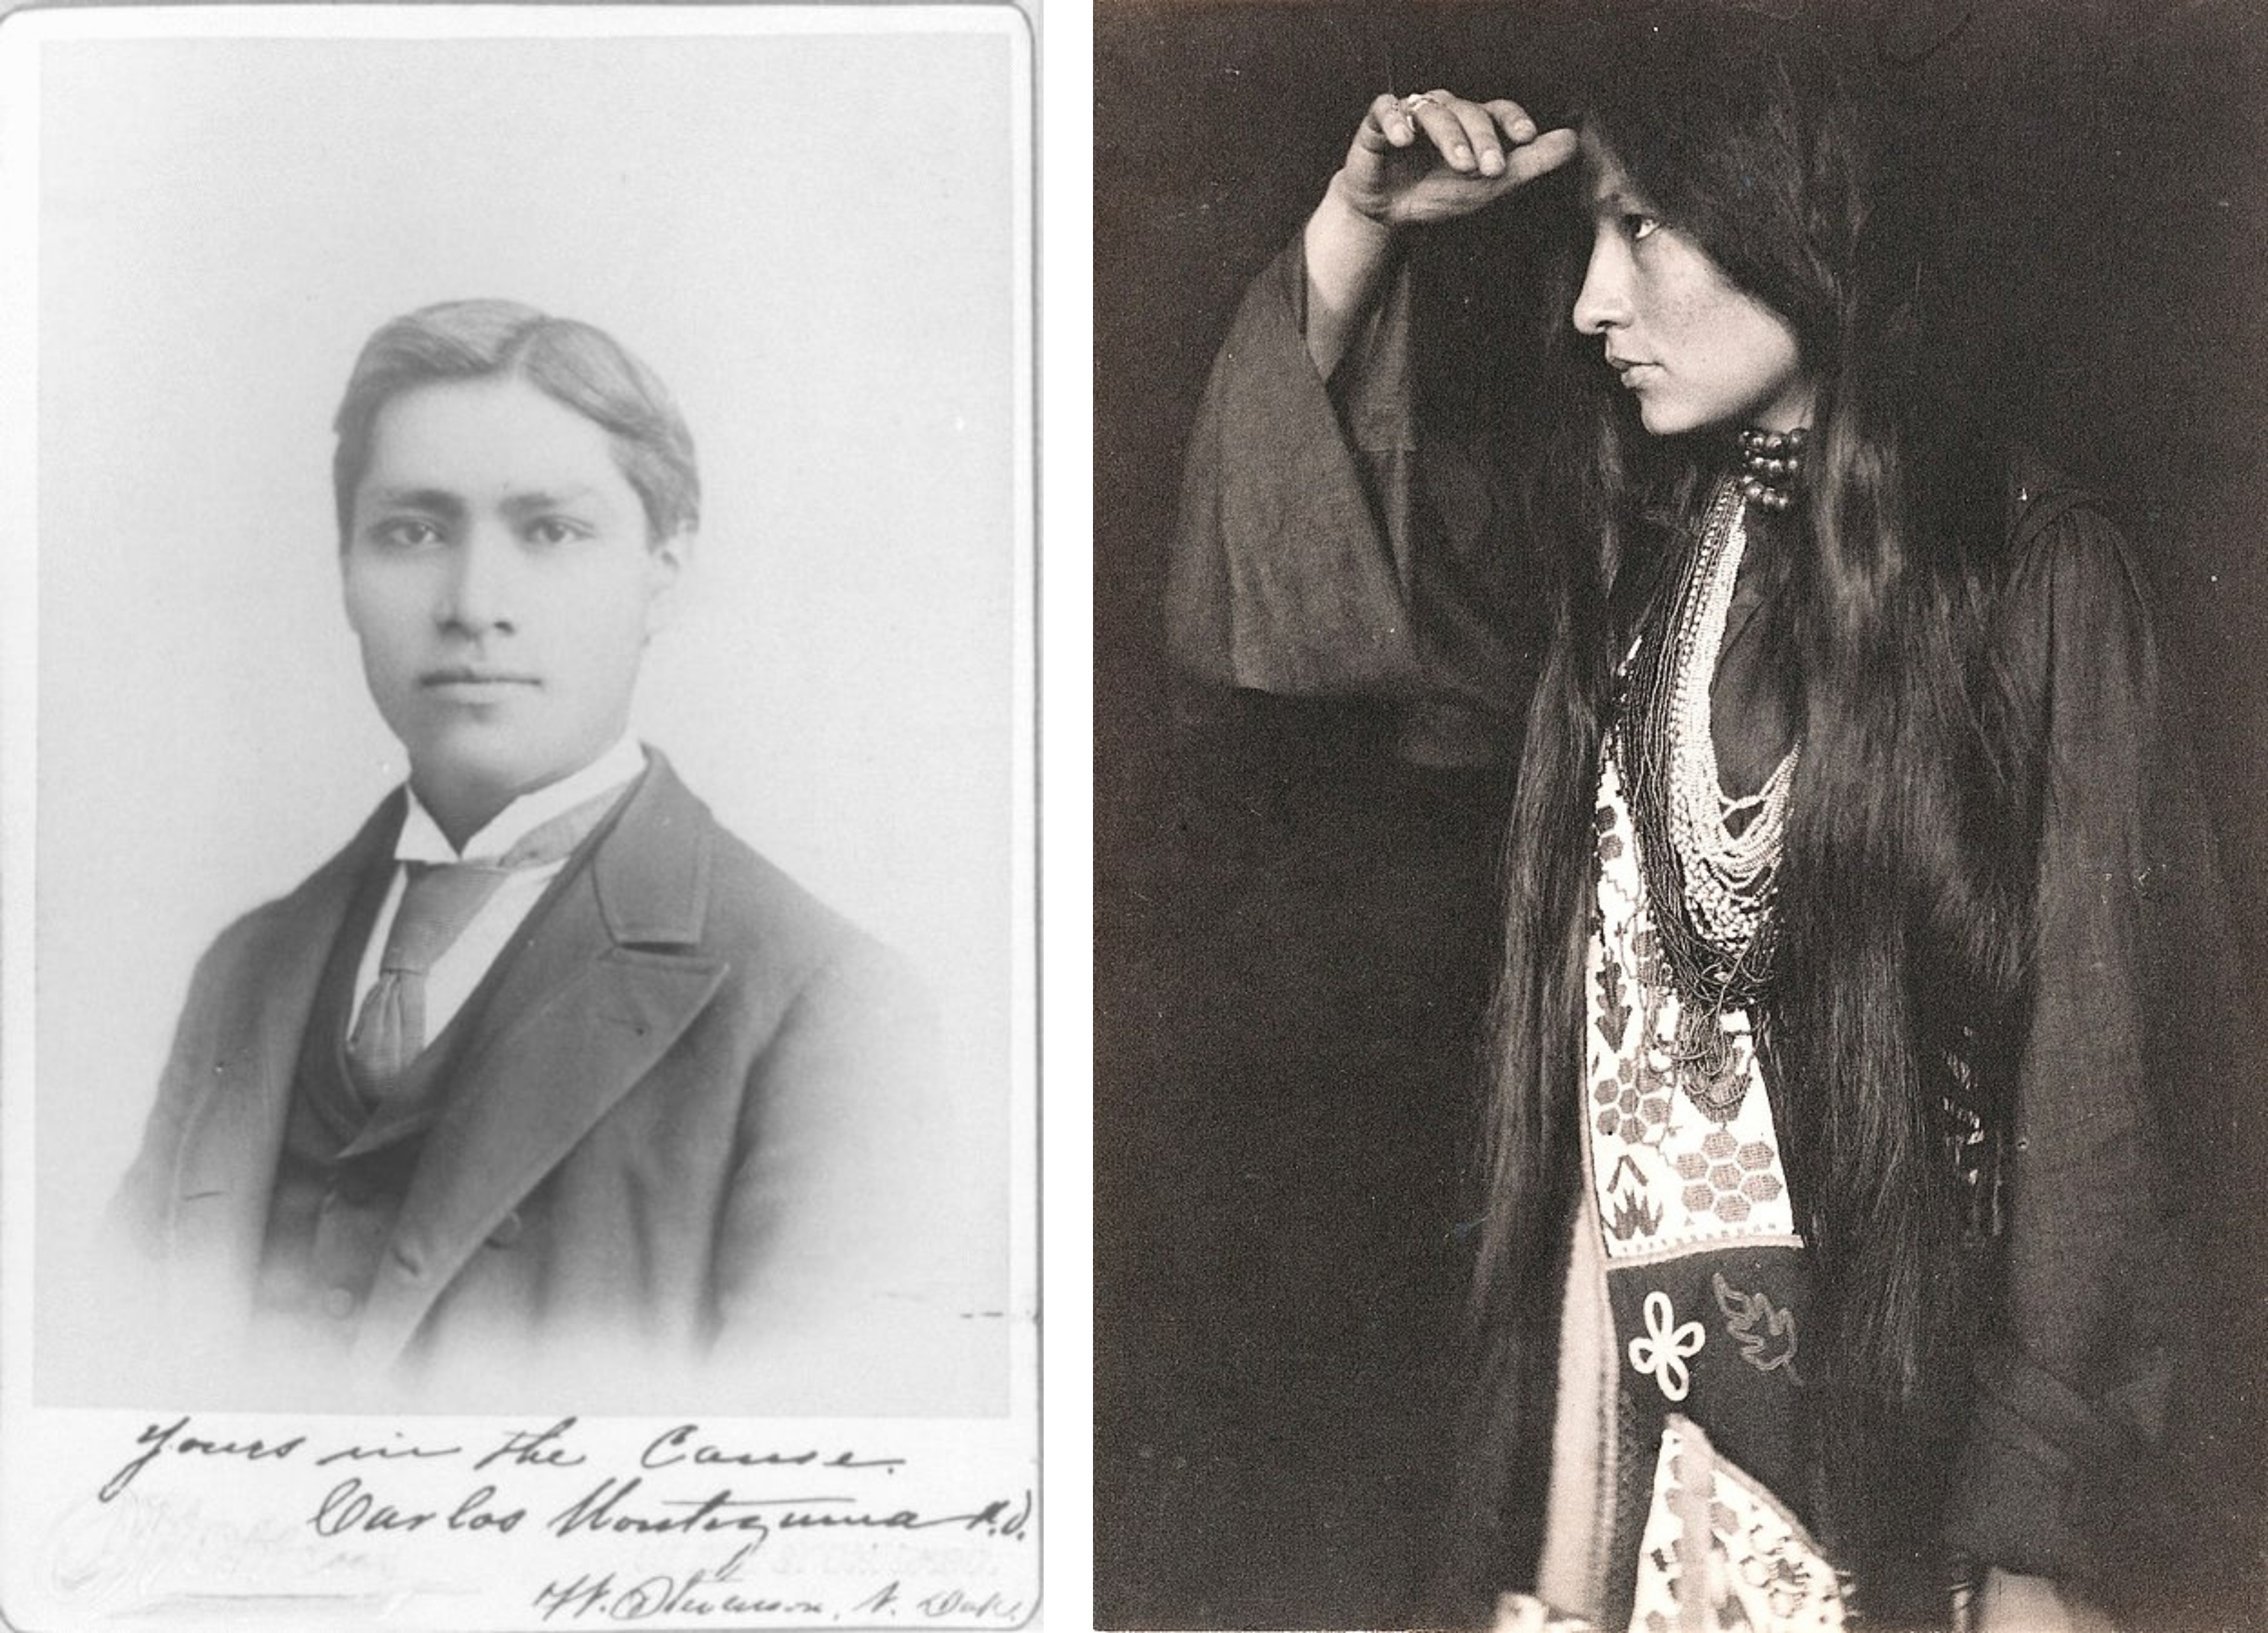 On the left, Carlos Montezuma. On the right, Gertrude Bonnin.